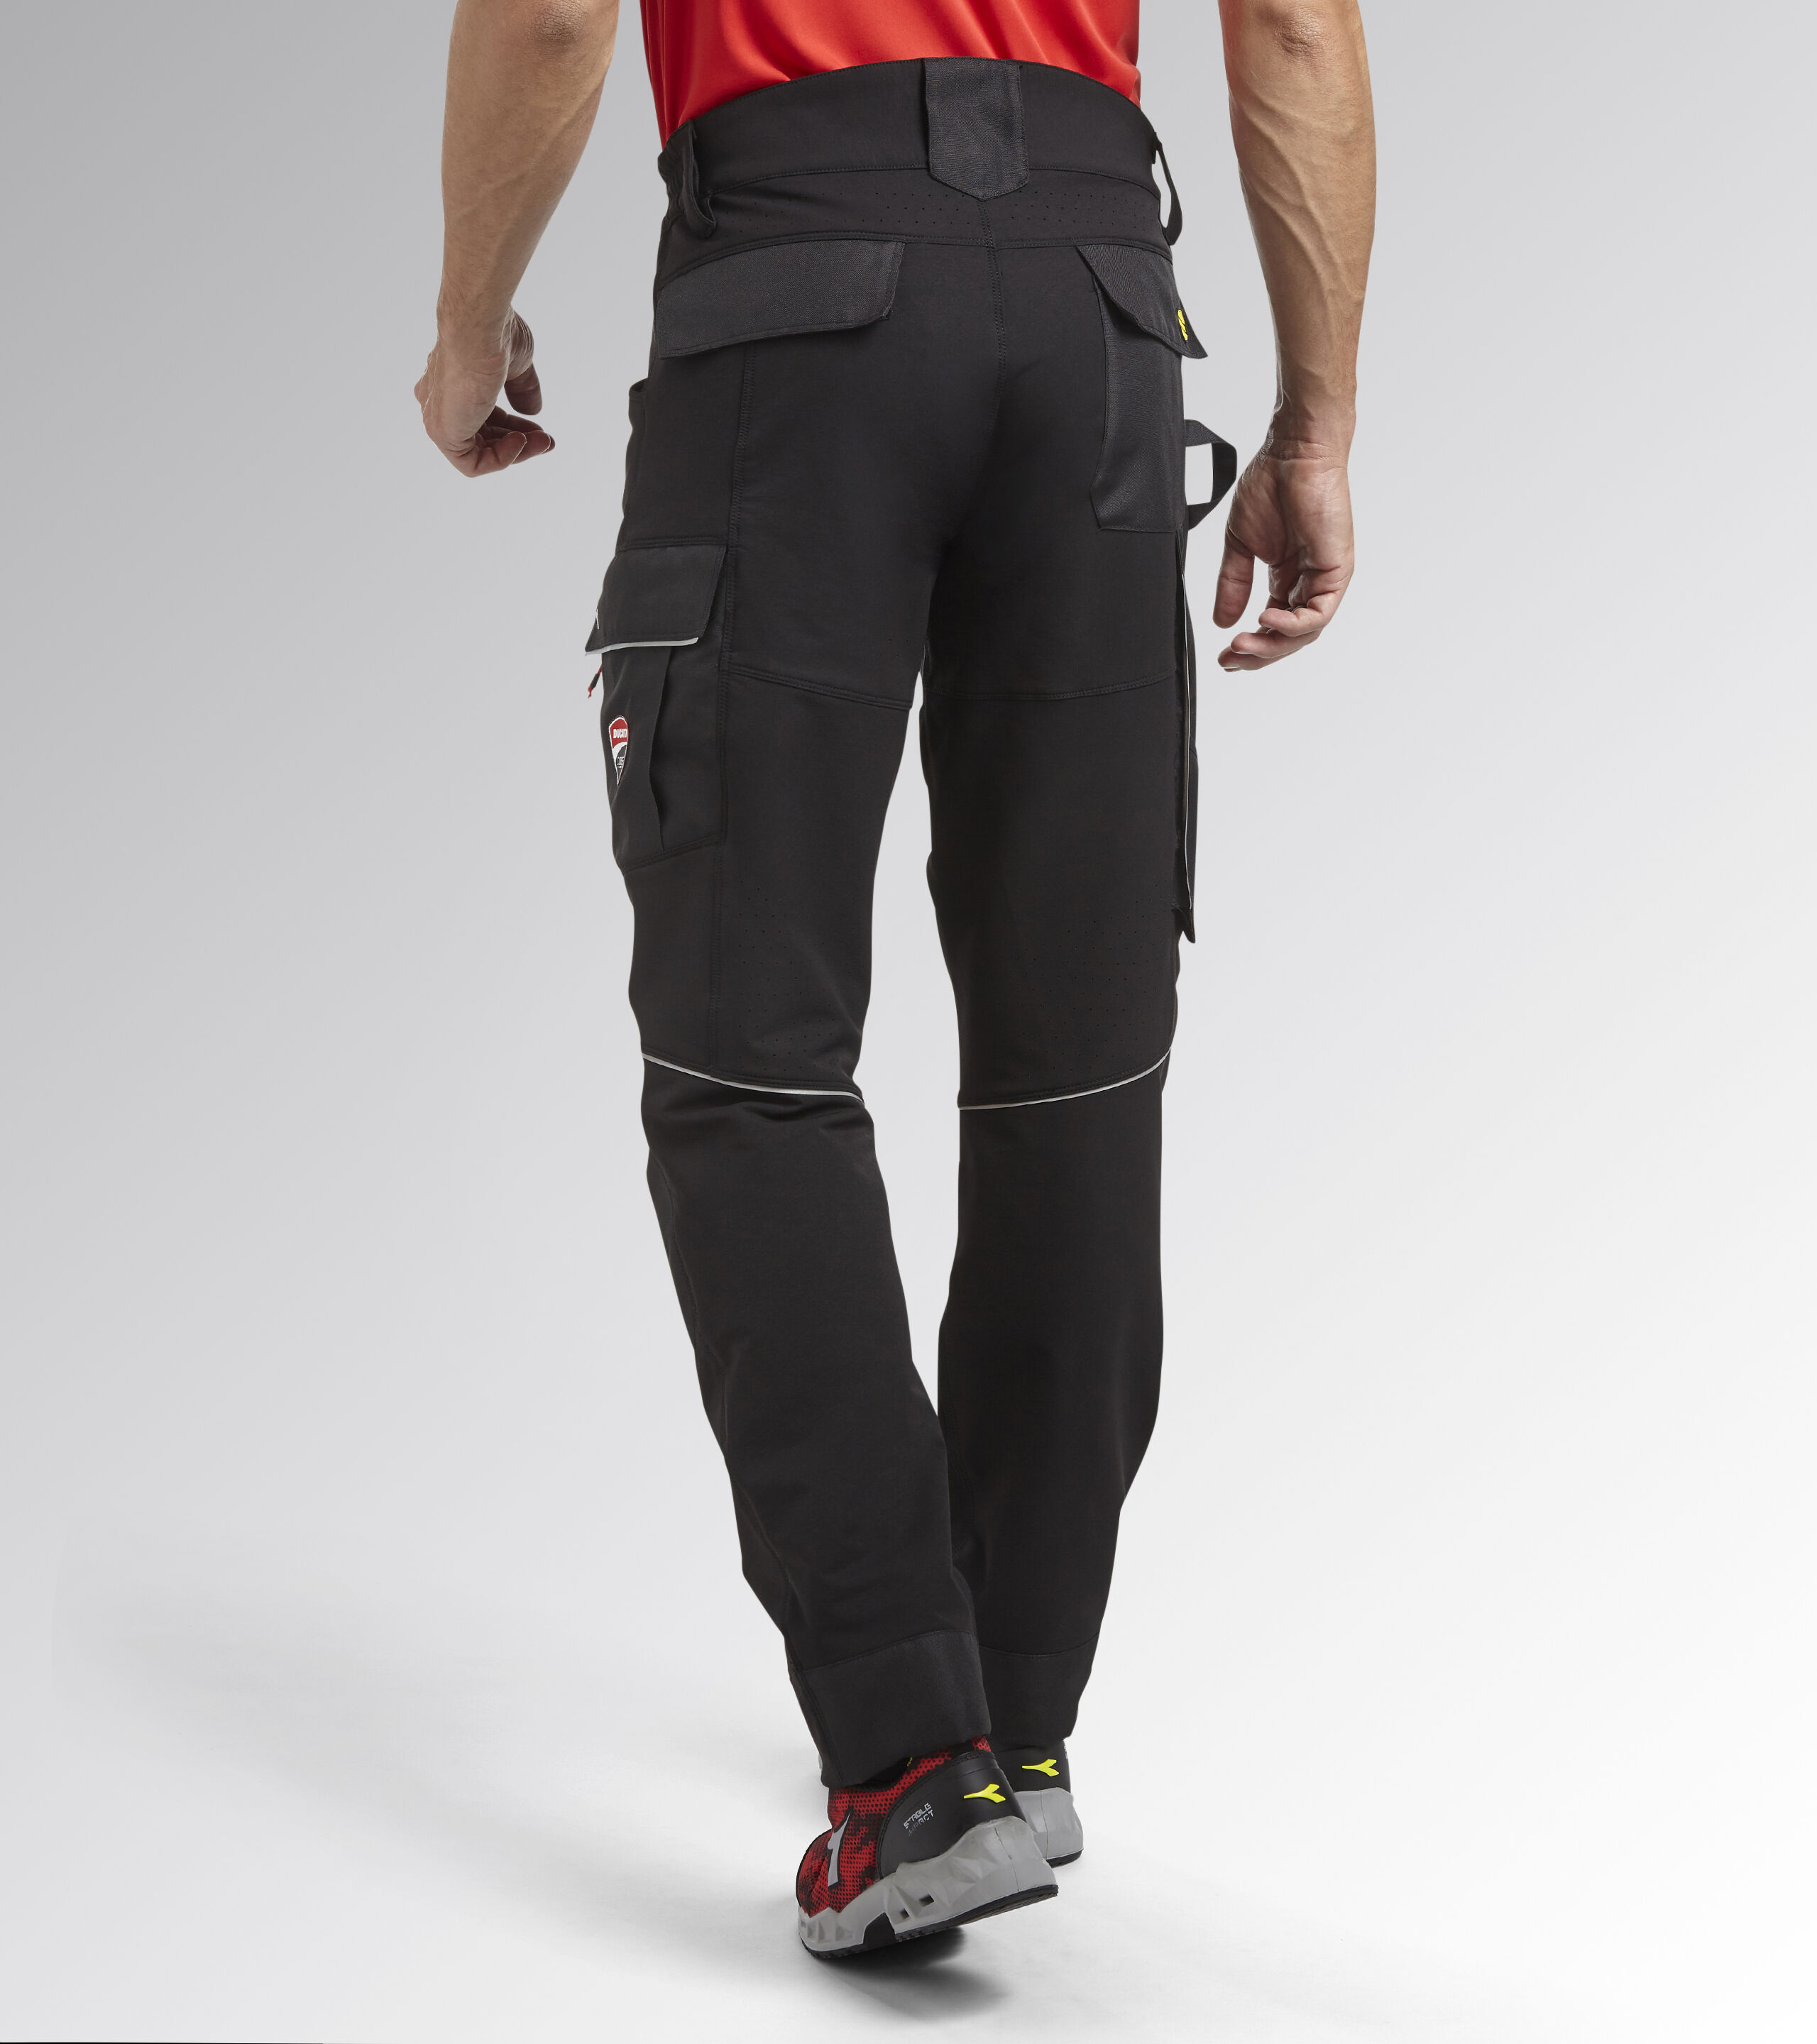 PANT PERFORMANCE DUCATI Work trousers - Diadora Utility x Ducati